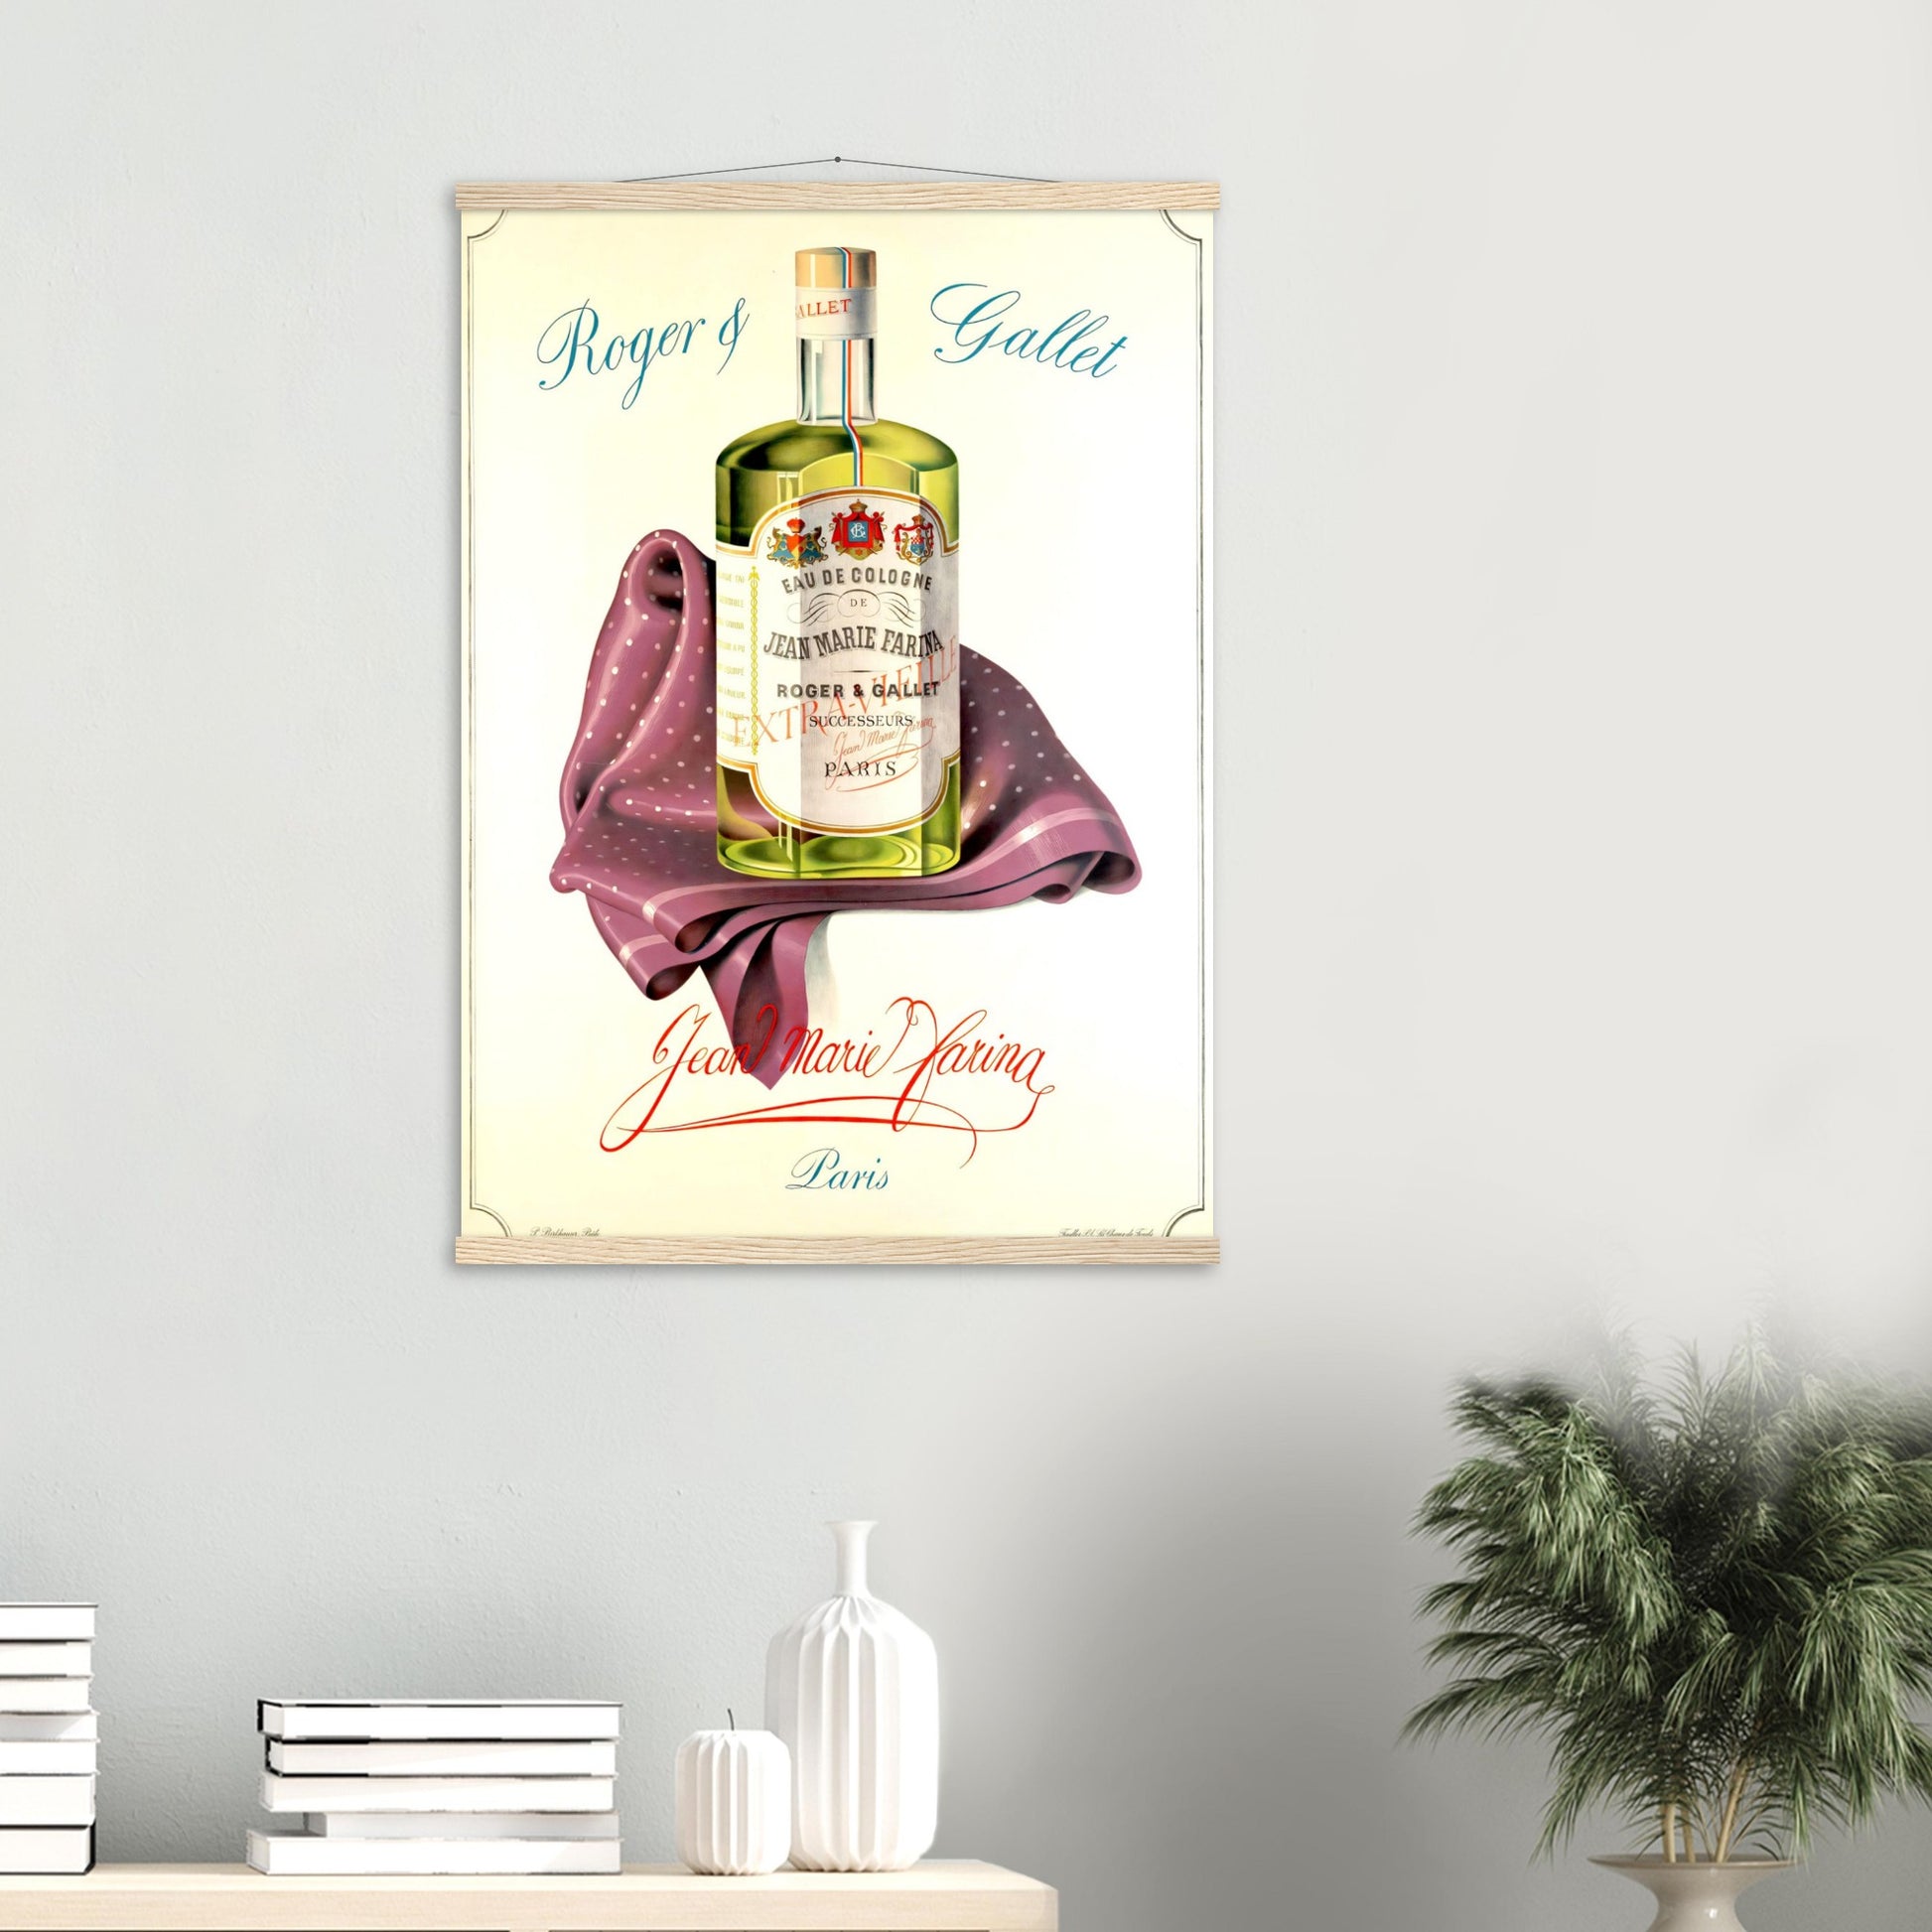 Vintage Poster Reprint, Parfume, Wall Art on Premium Paper - Posterify